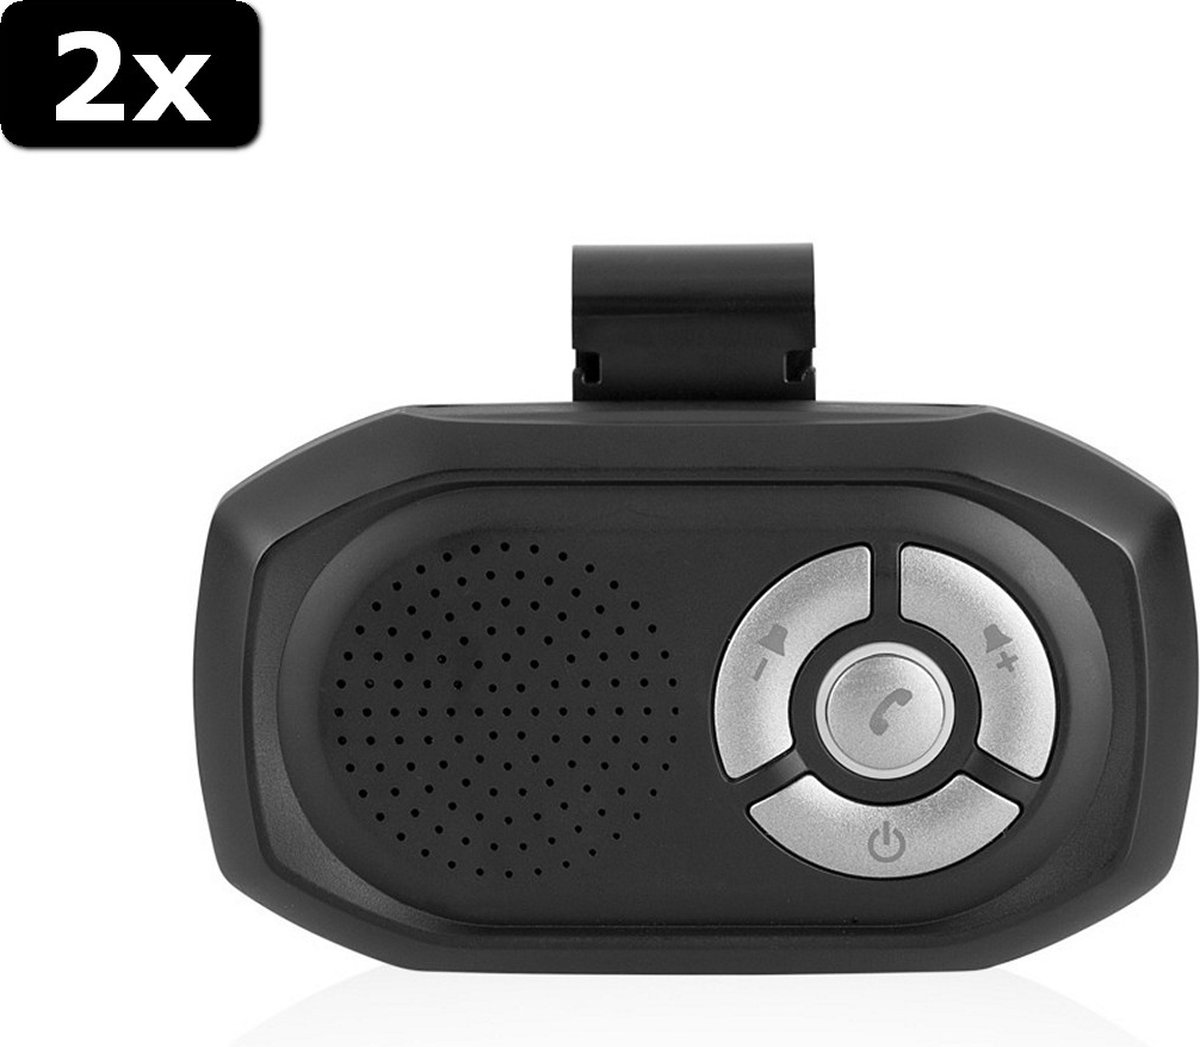 2x Smartwares SK-1541 Bluetooth Car Kit Zwart